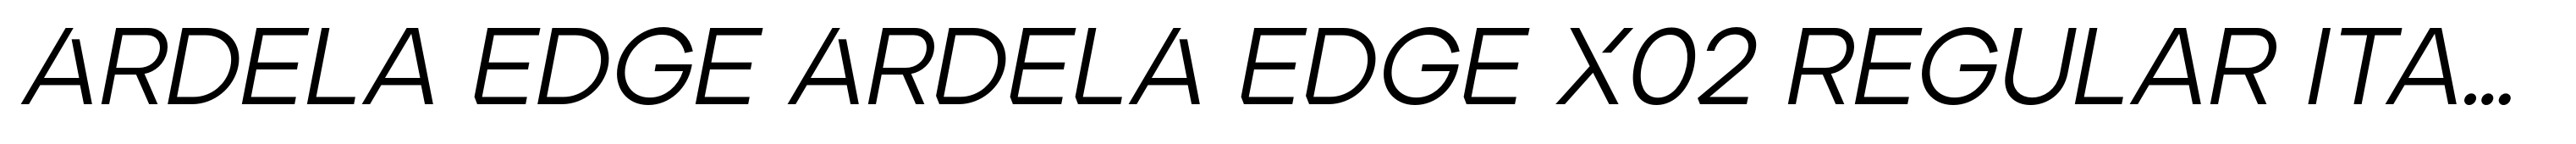 Ardela Edge ARDELA EDGE X02 Regular Italic